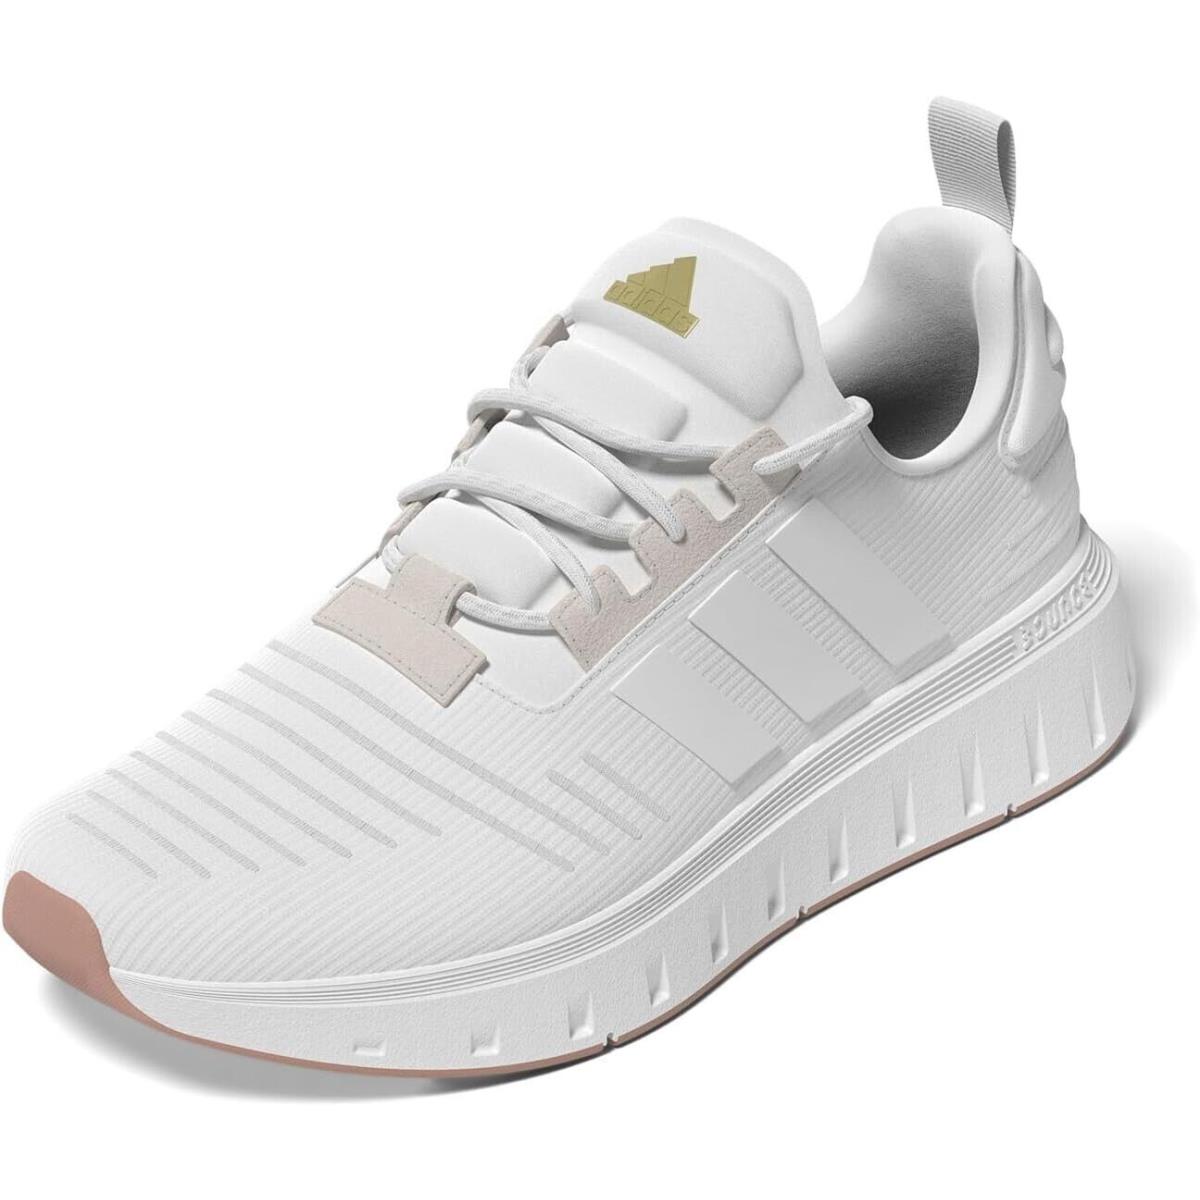 Adidas Womens Swift Run23 Running Shoe White/gold Metallic Size 8 US